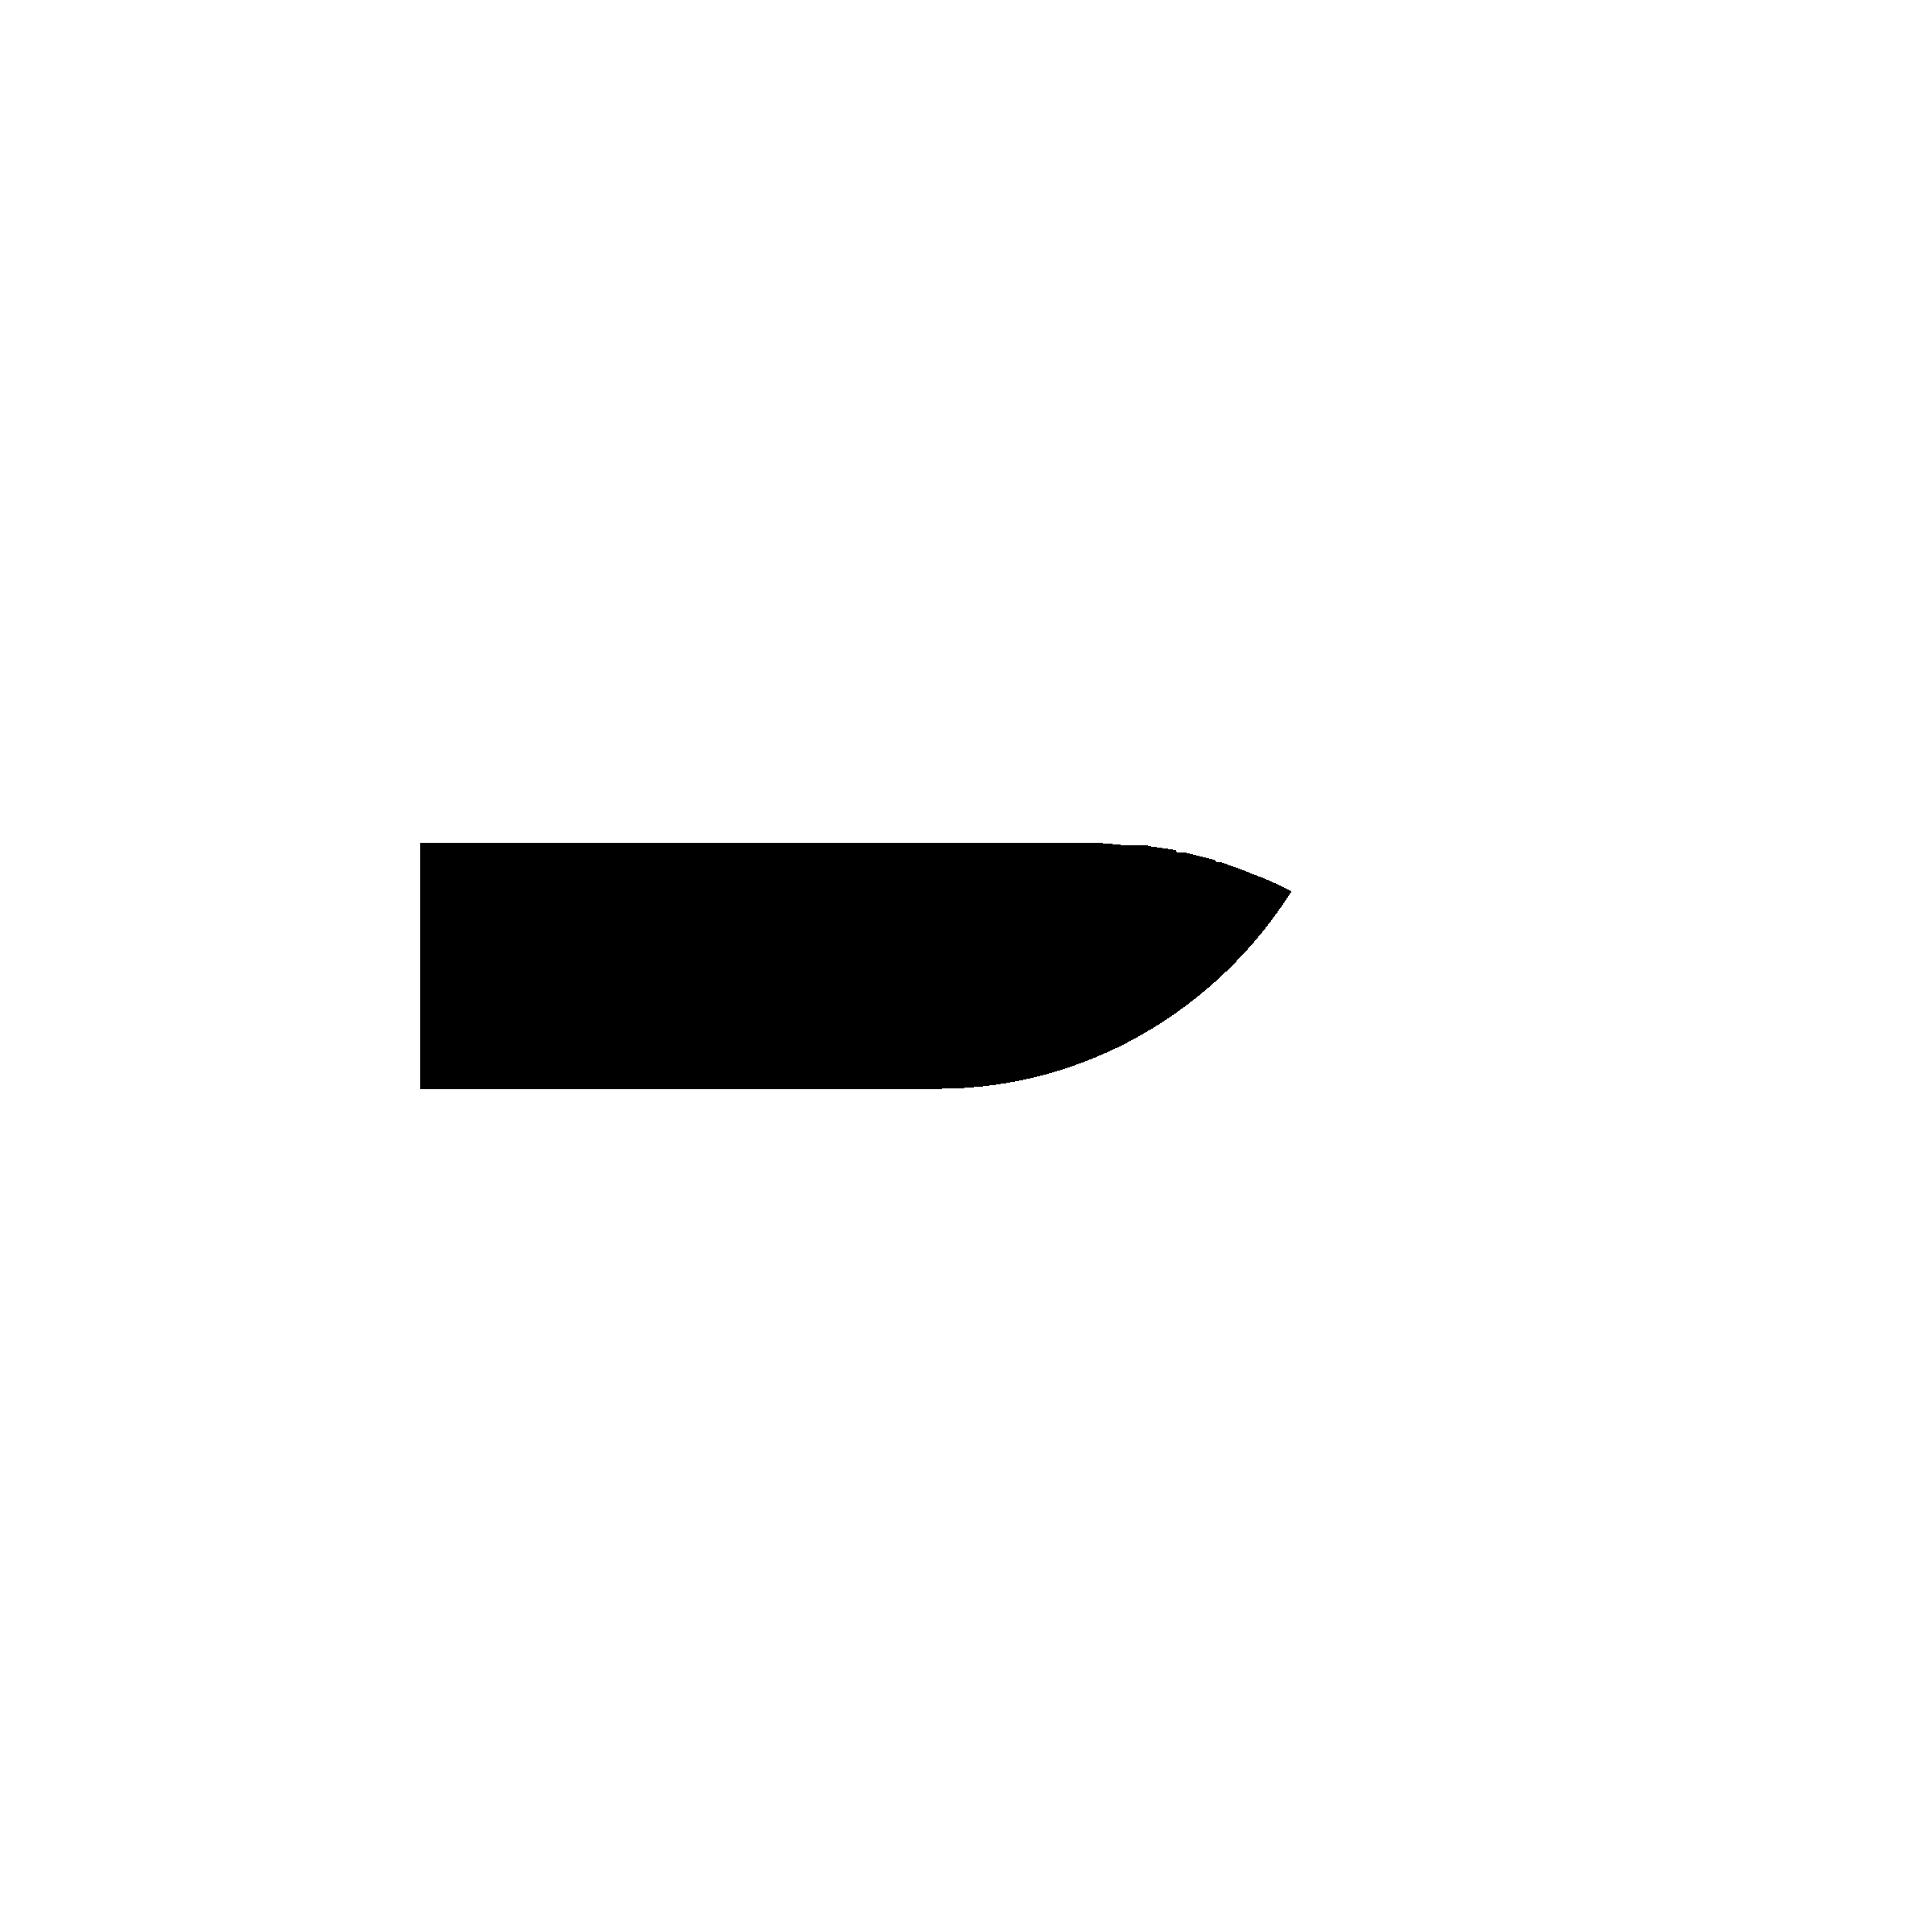 Black and White Beats Logo - Elastic beats Logo PNG Transparent & SVG Vector - Freebie Supply